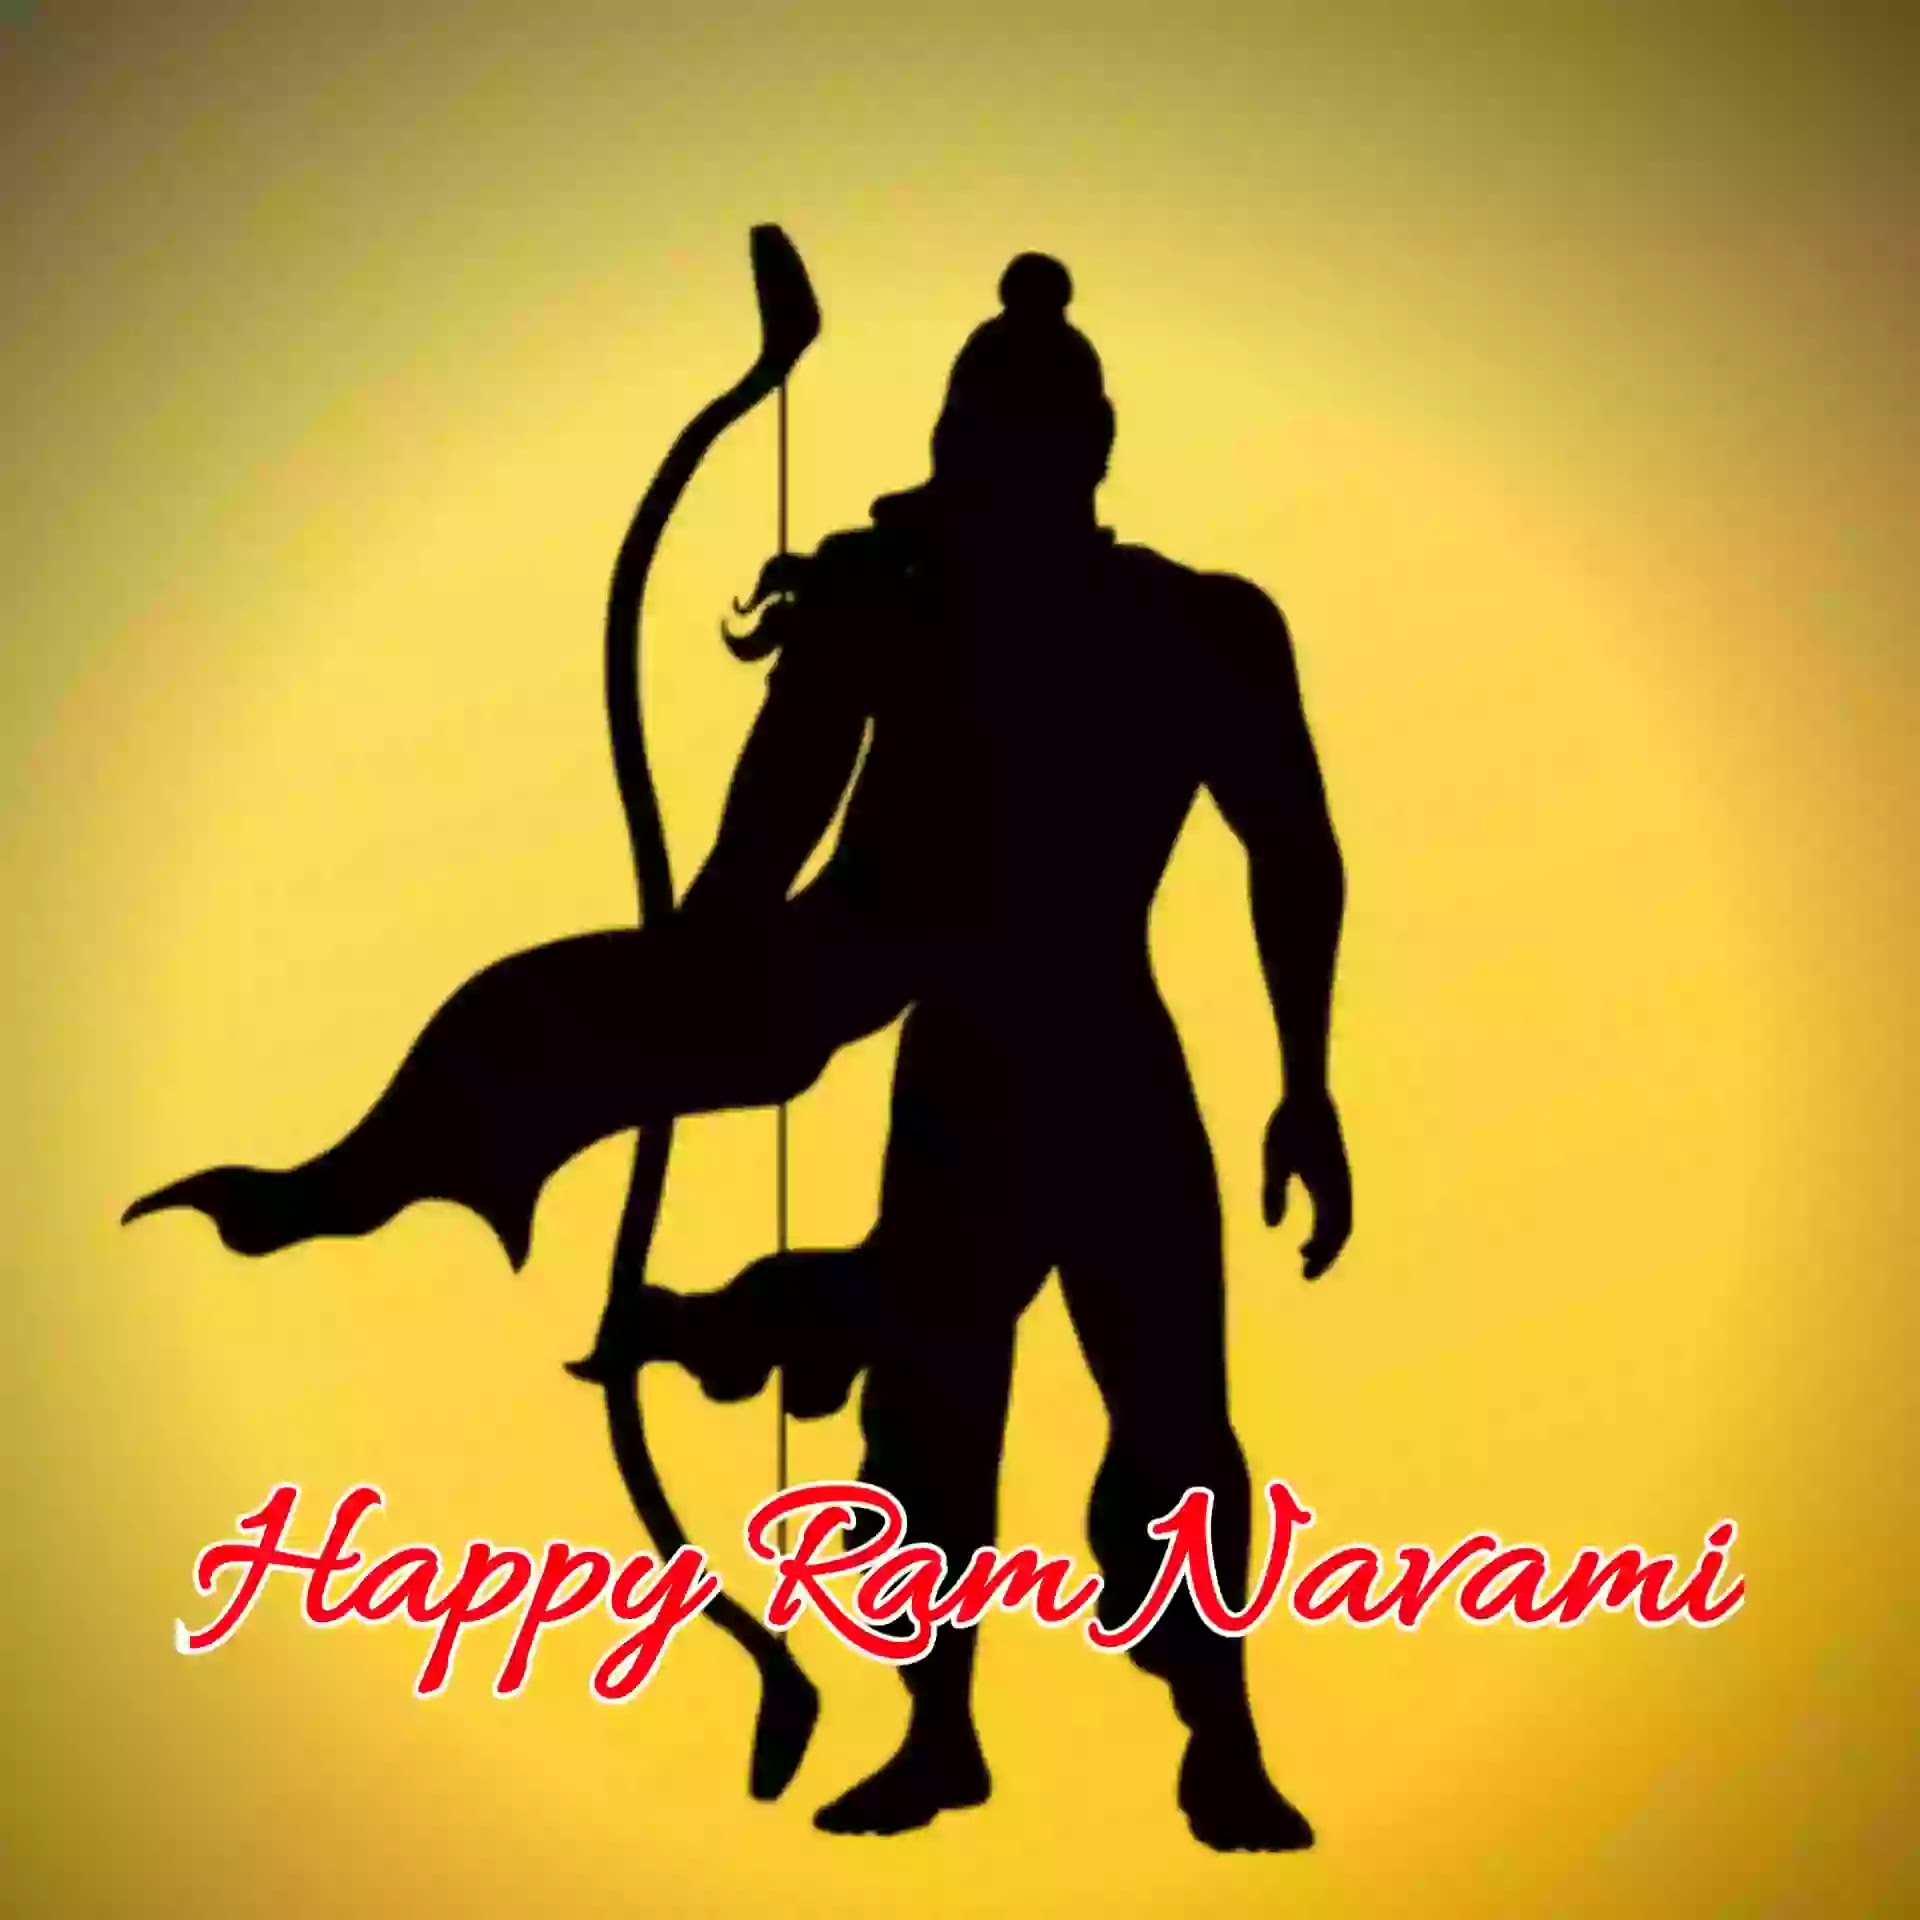 Happy ram navami wishes images